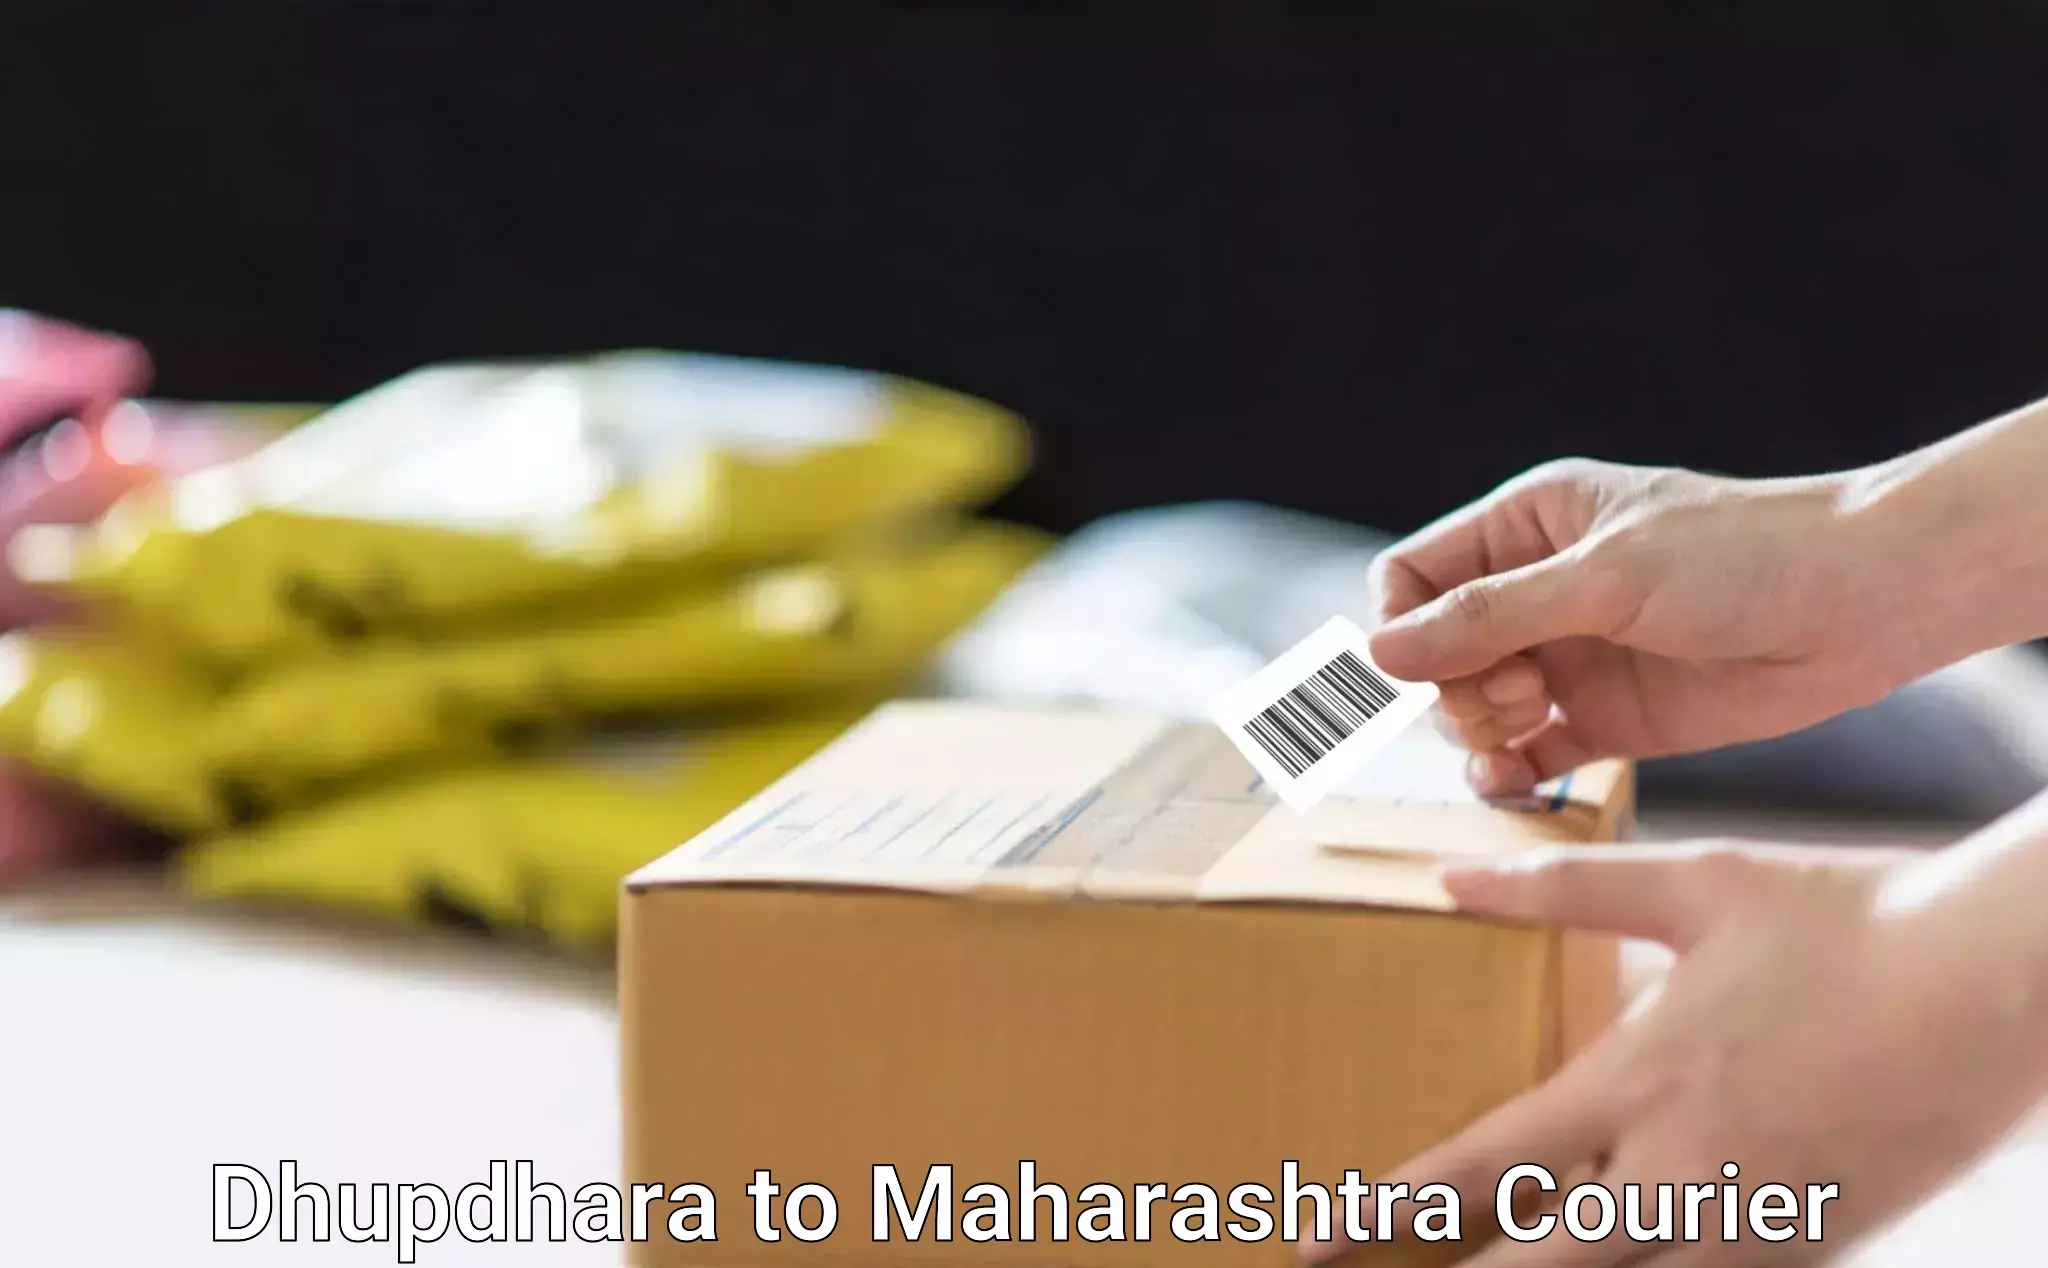 Personalized courier experiences Dhupdhara to Maharashtra